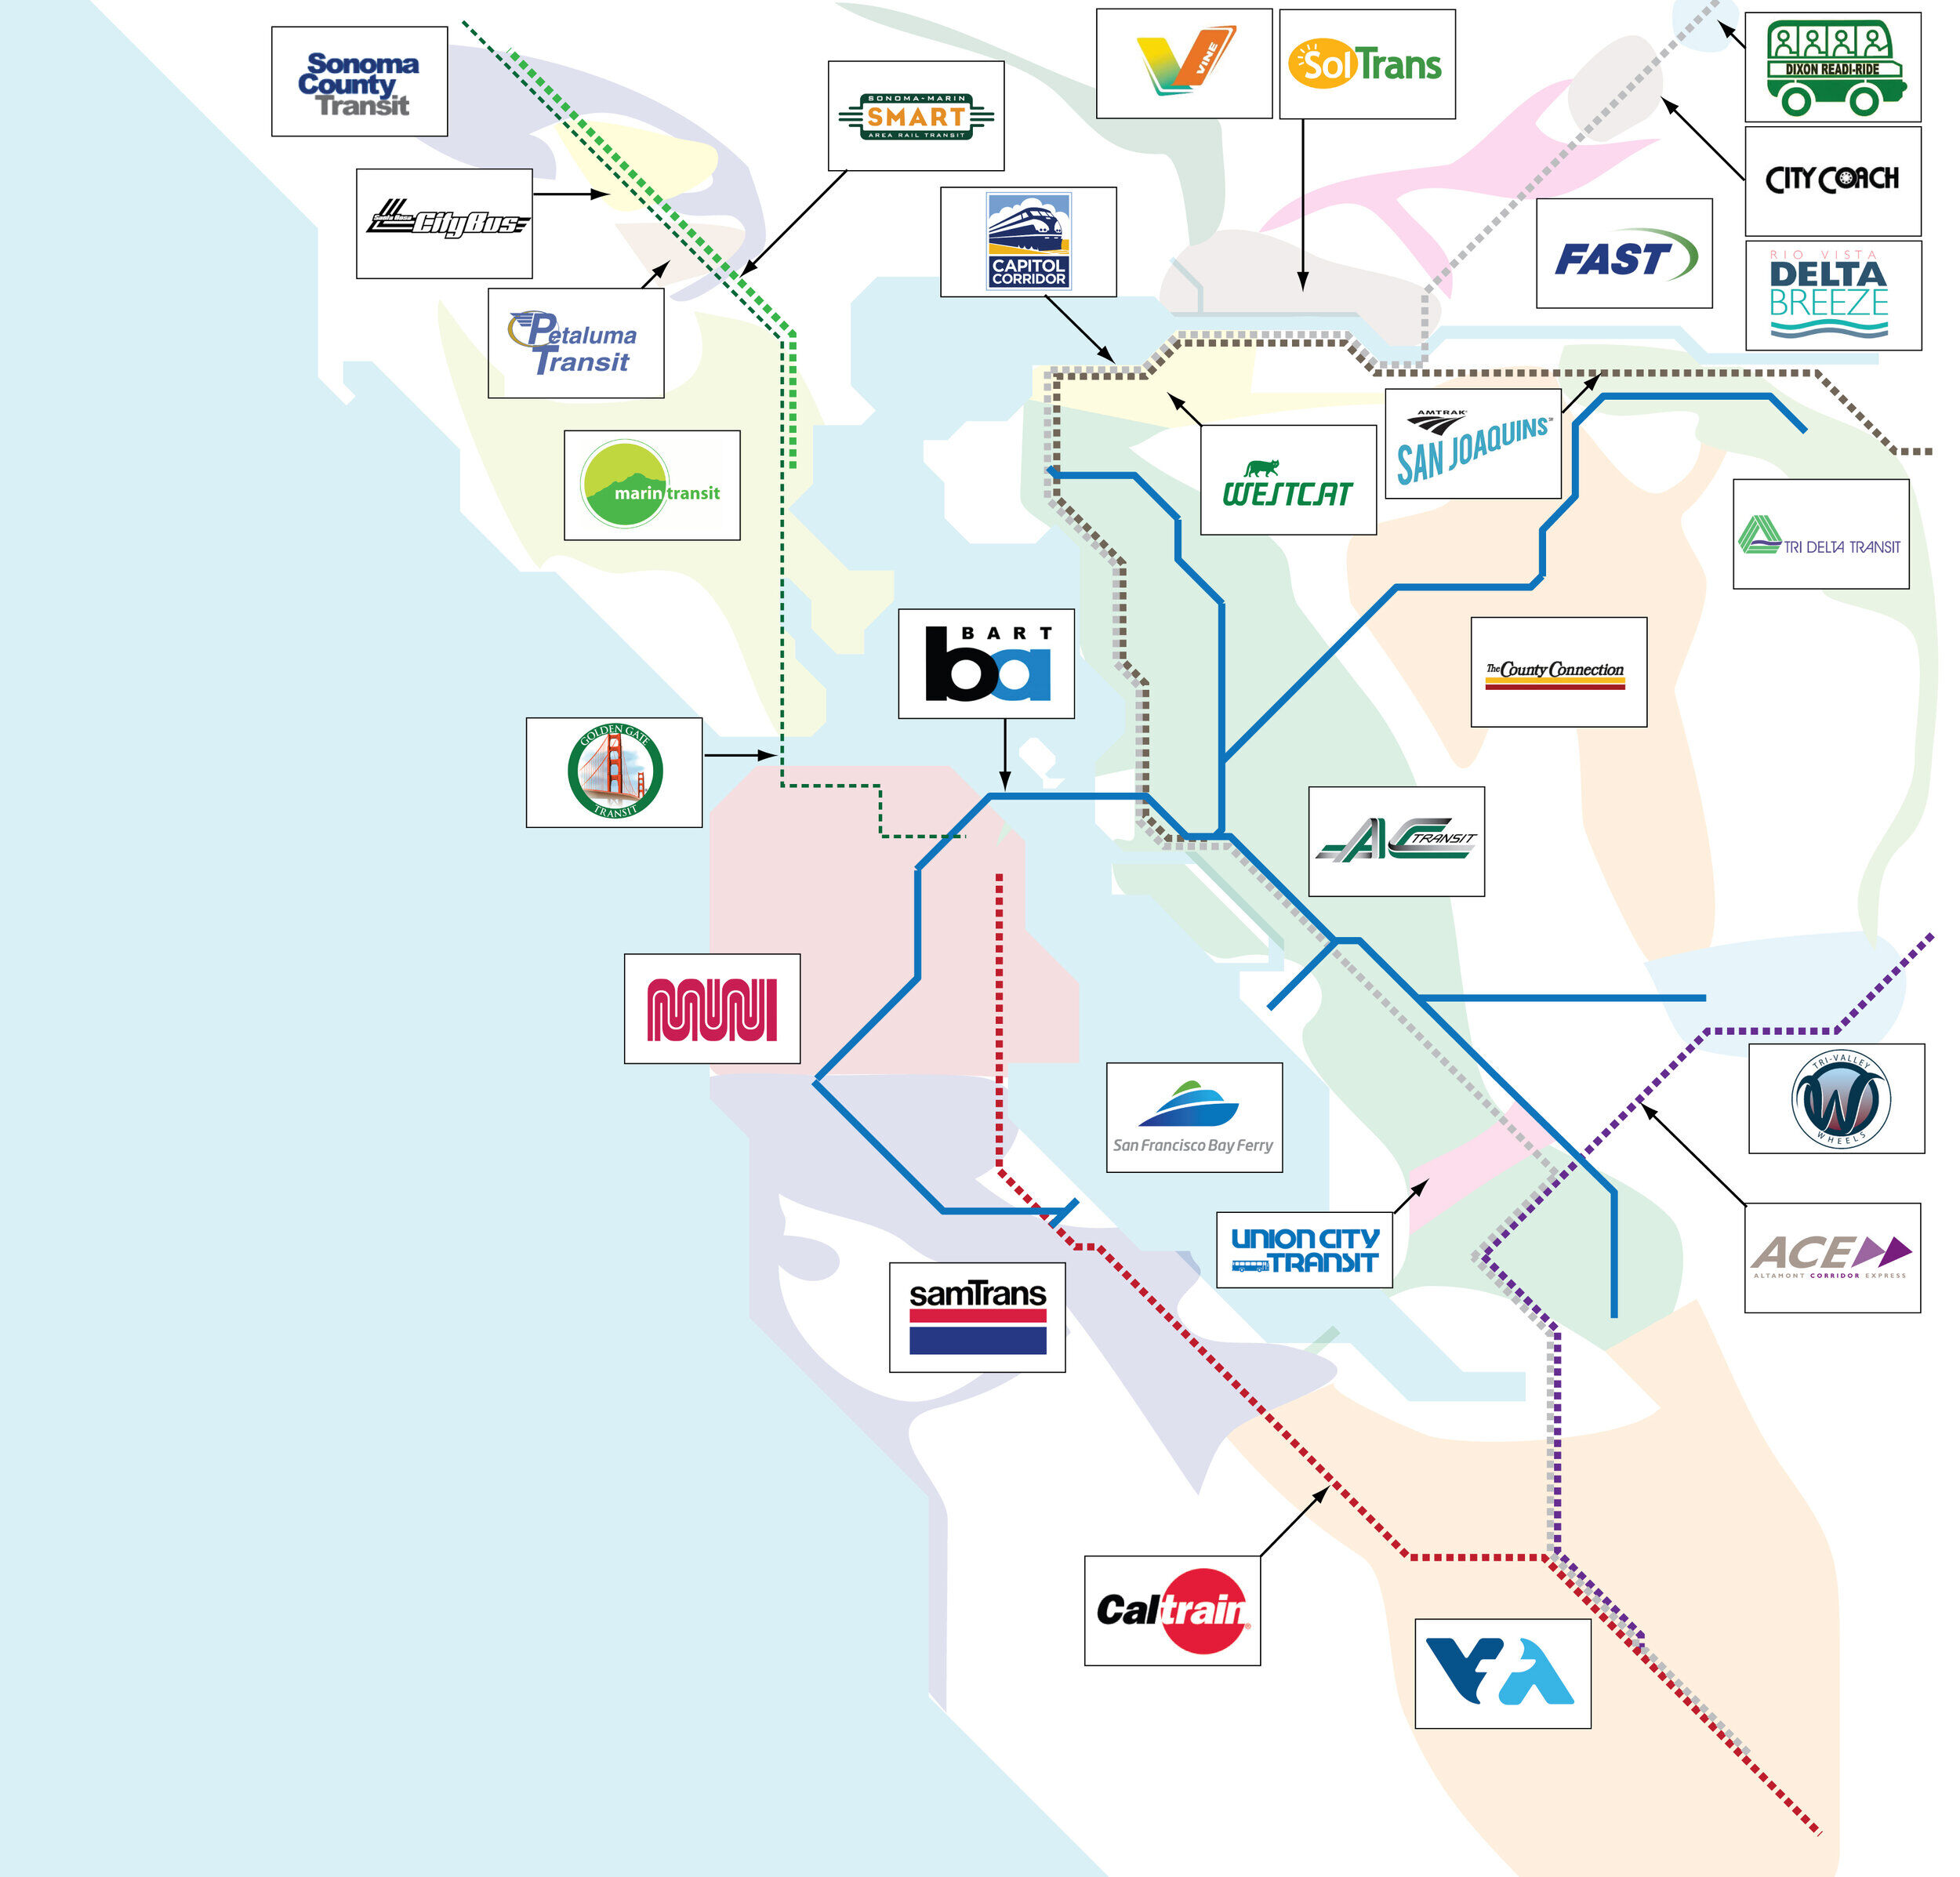 Map of public transit agencies